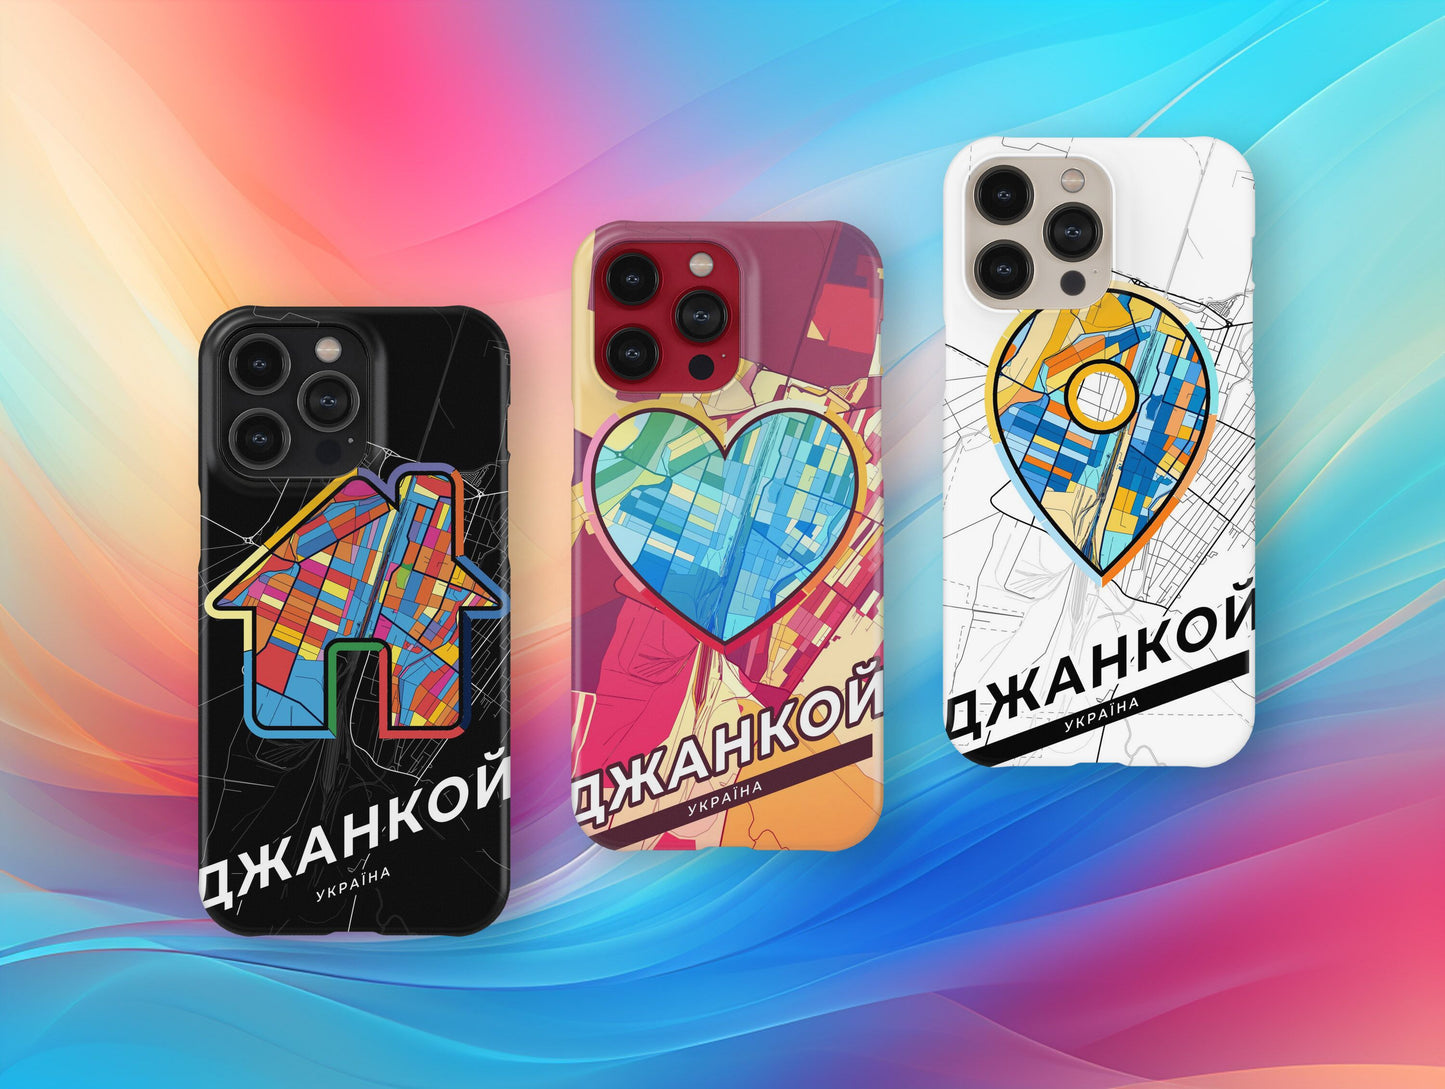 Dzhankoy Ukraine slim phone case with colorful icon. Birthday, wedding or housewarming gift. Couple match cases.